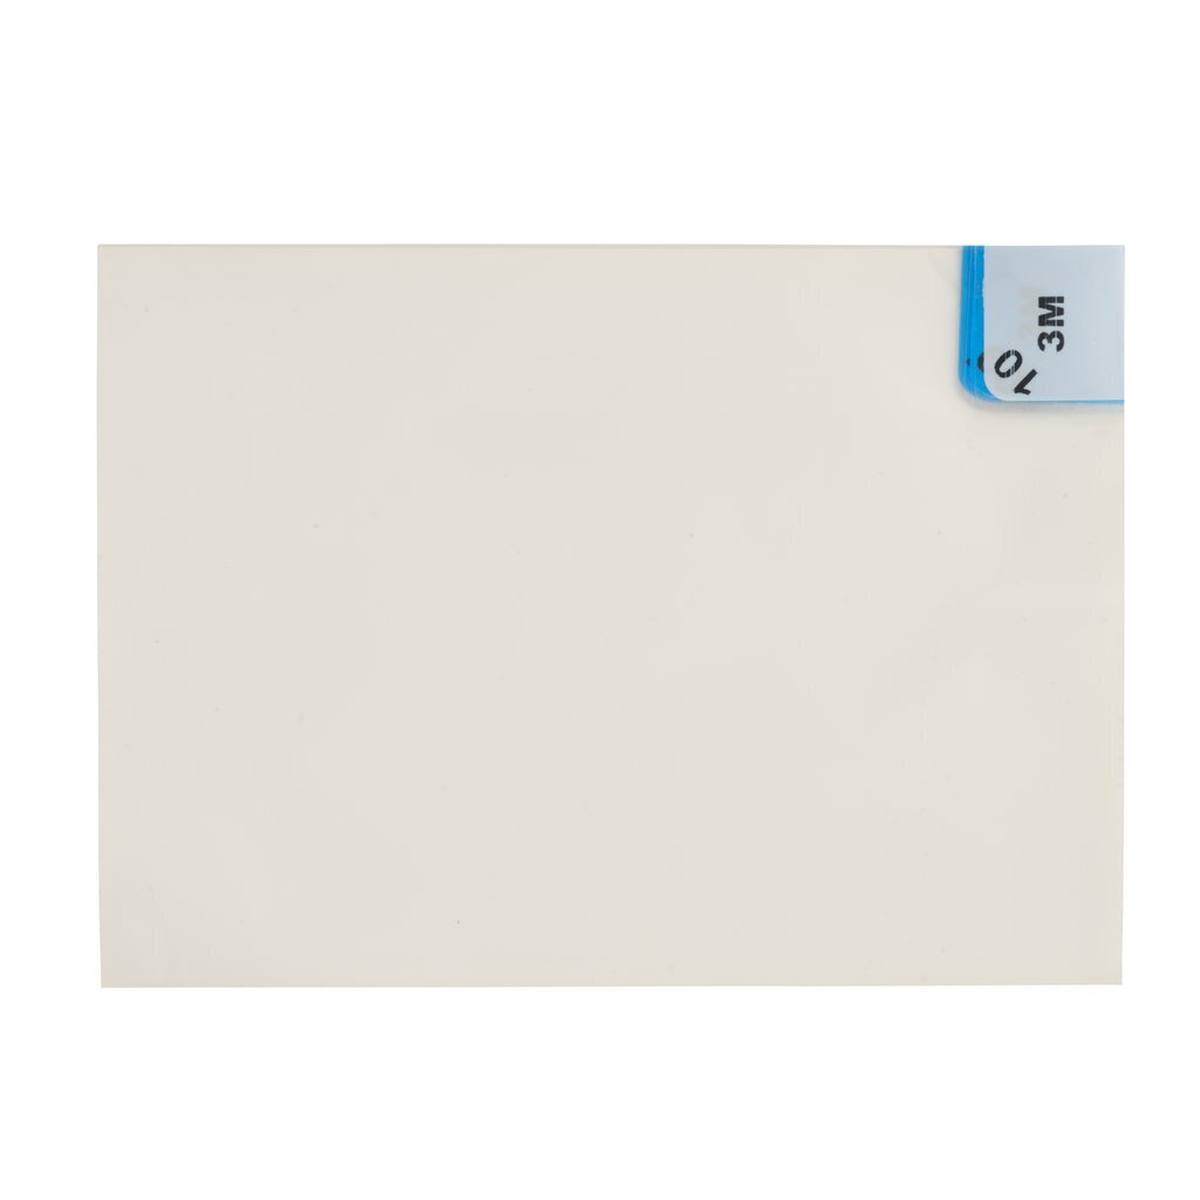 3M 4300 Estera adhesiva para polvo fino Nomad, blanca, 1,15 m x 0,45 m, 40 capas de polietileno transparente